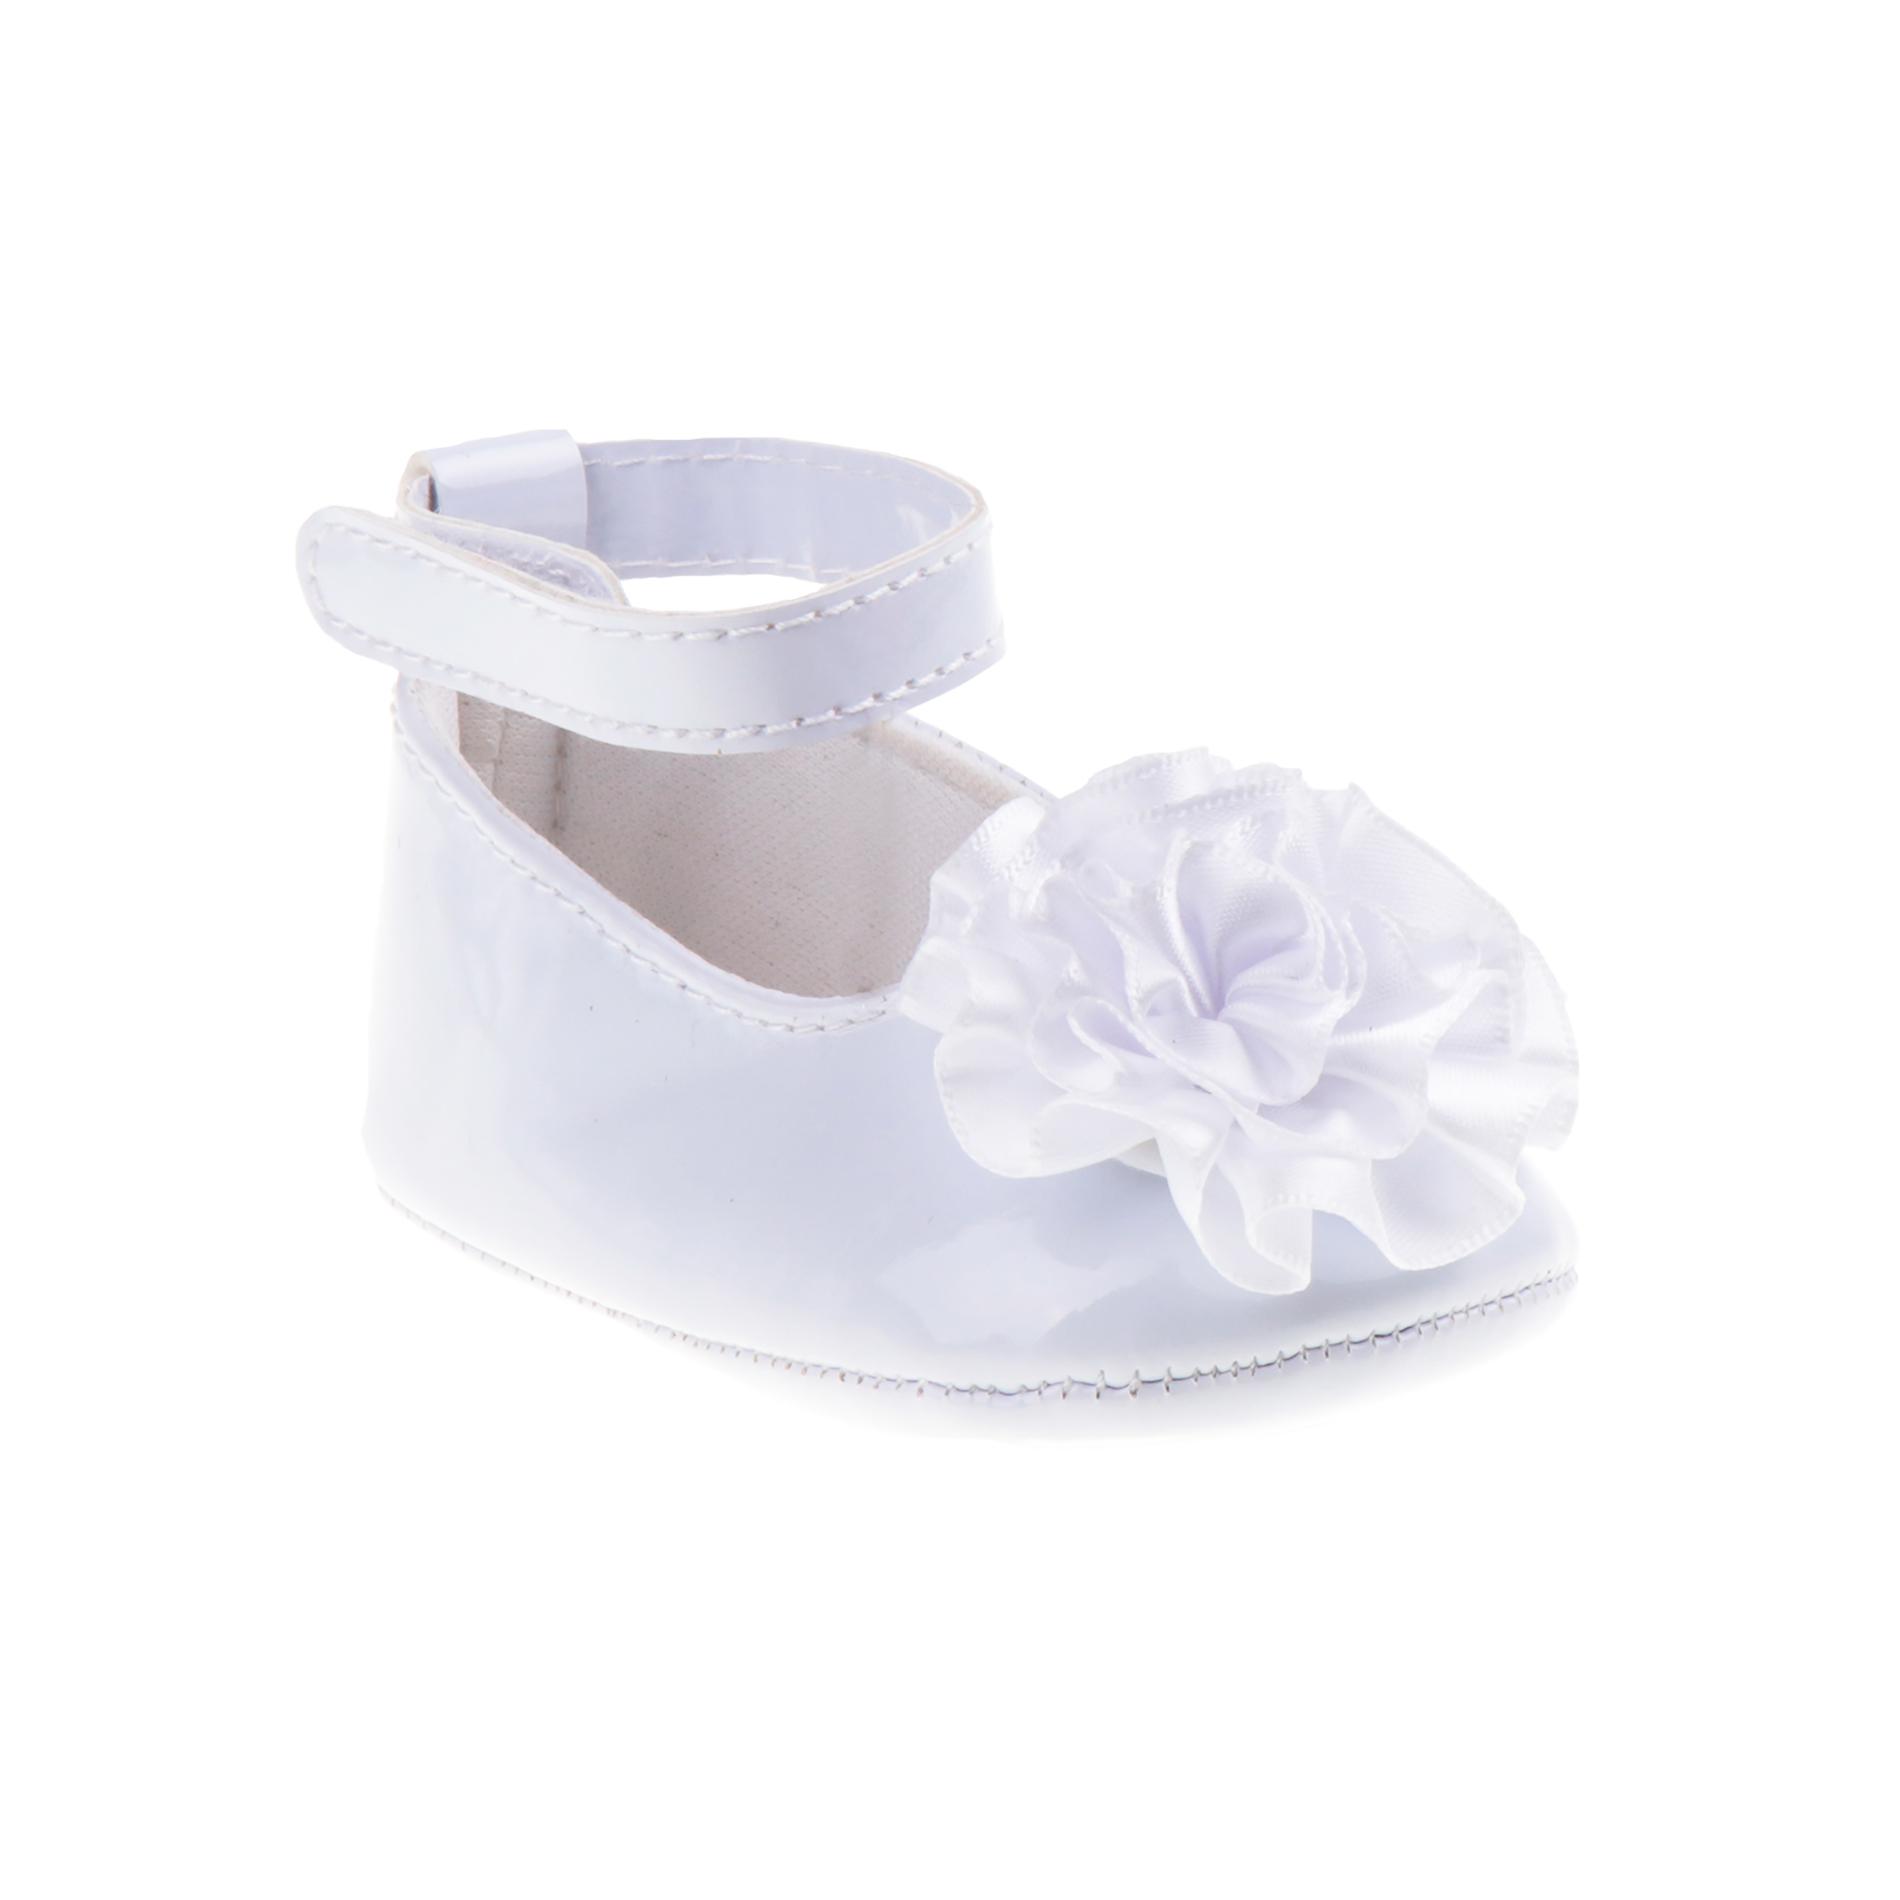 Laura Ashley Baby Girls' Dress Shoe - White